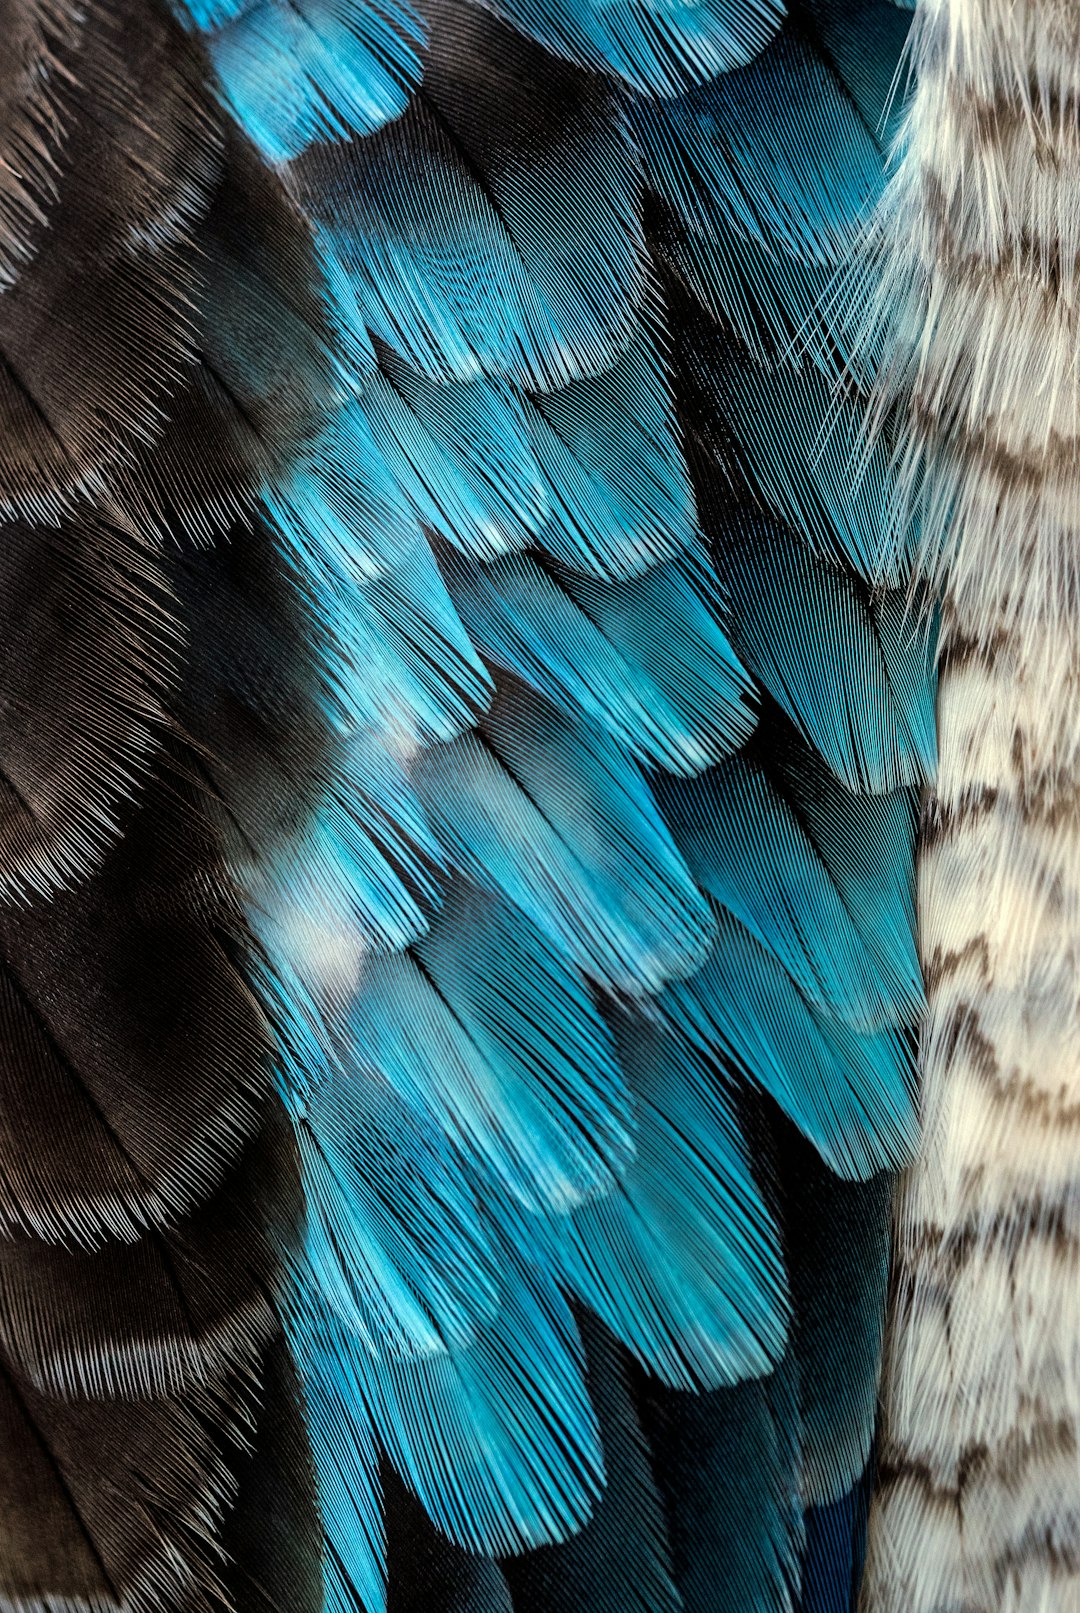 black and blue feather photo – Free Australia Image on Unsplash